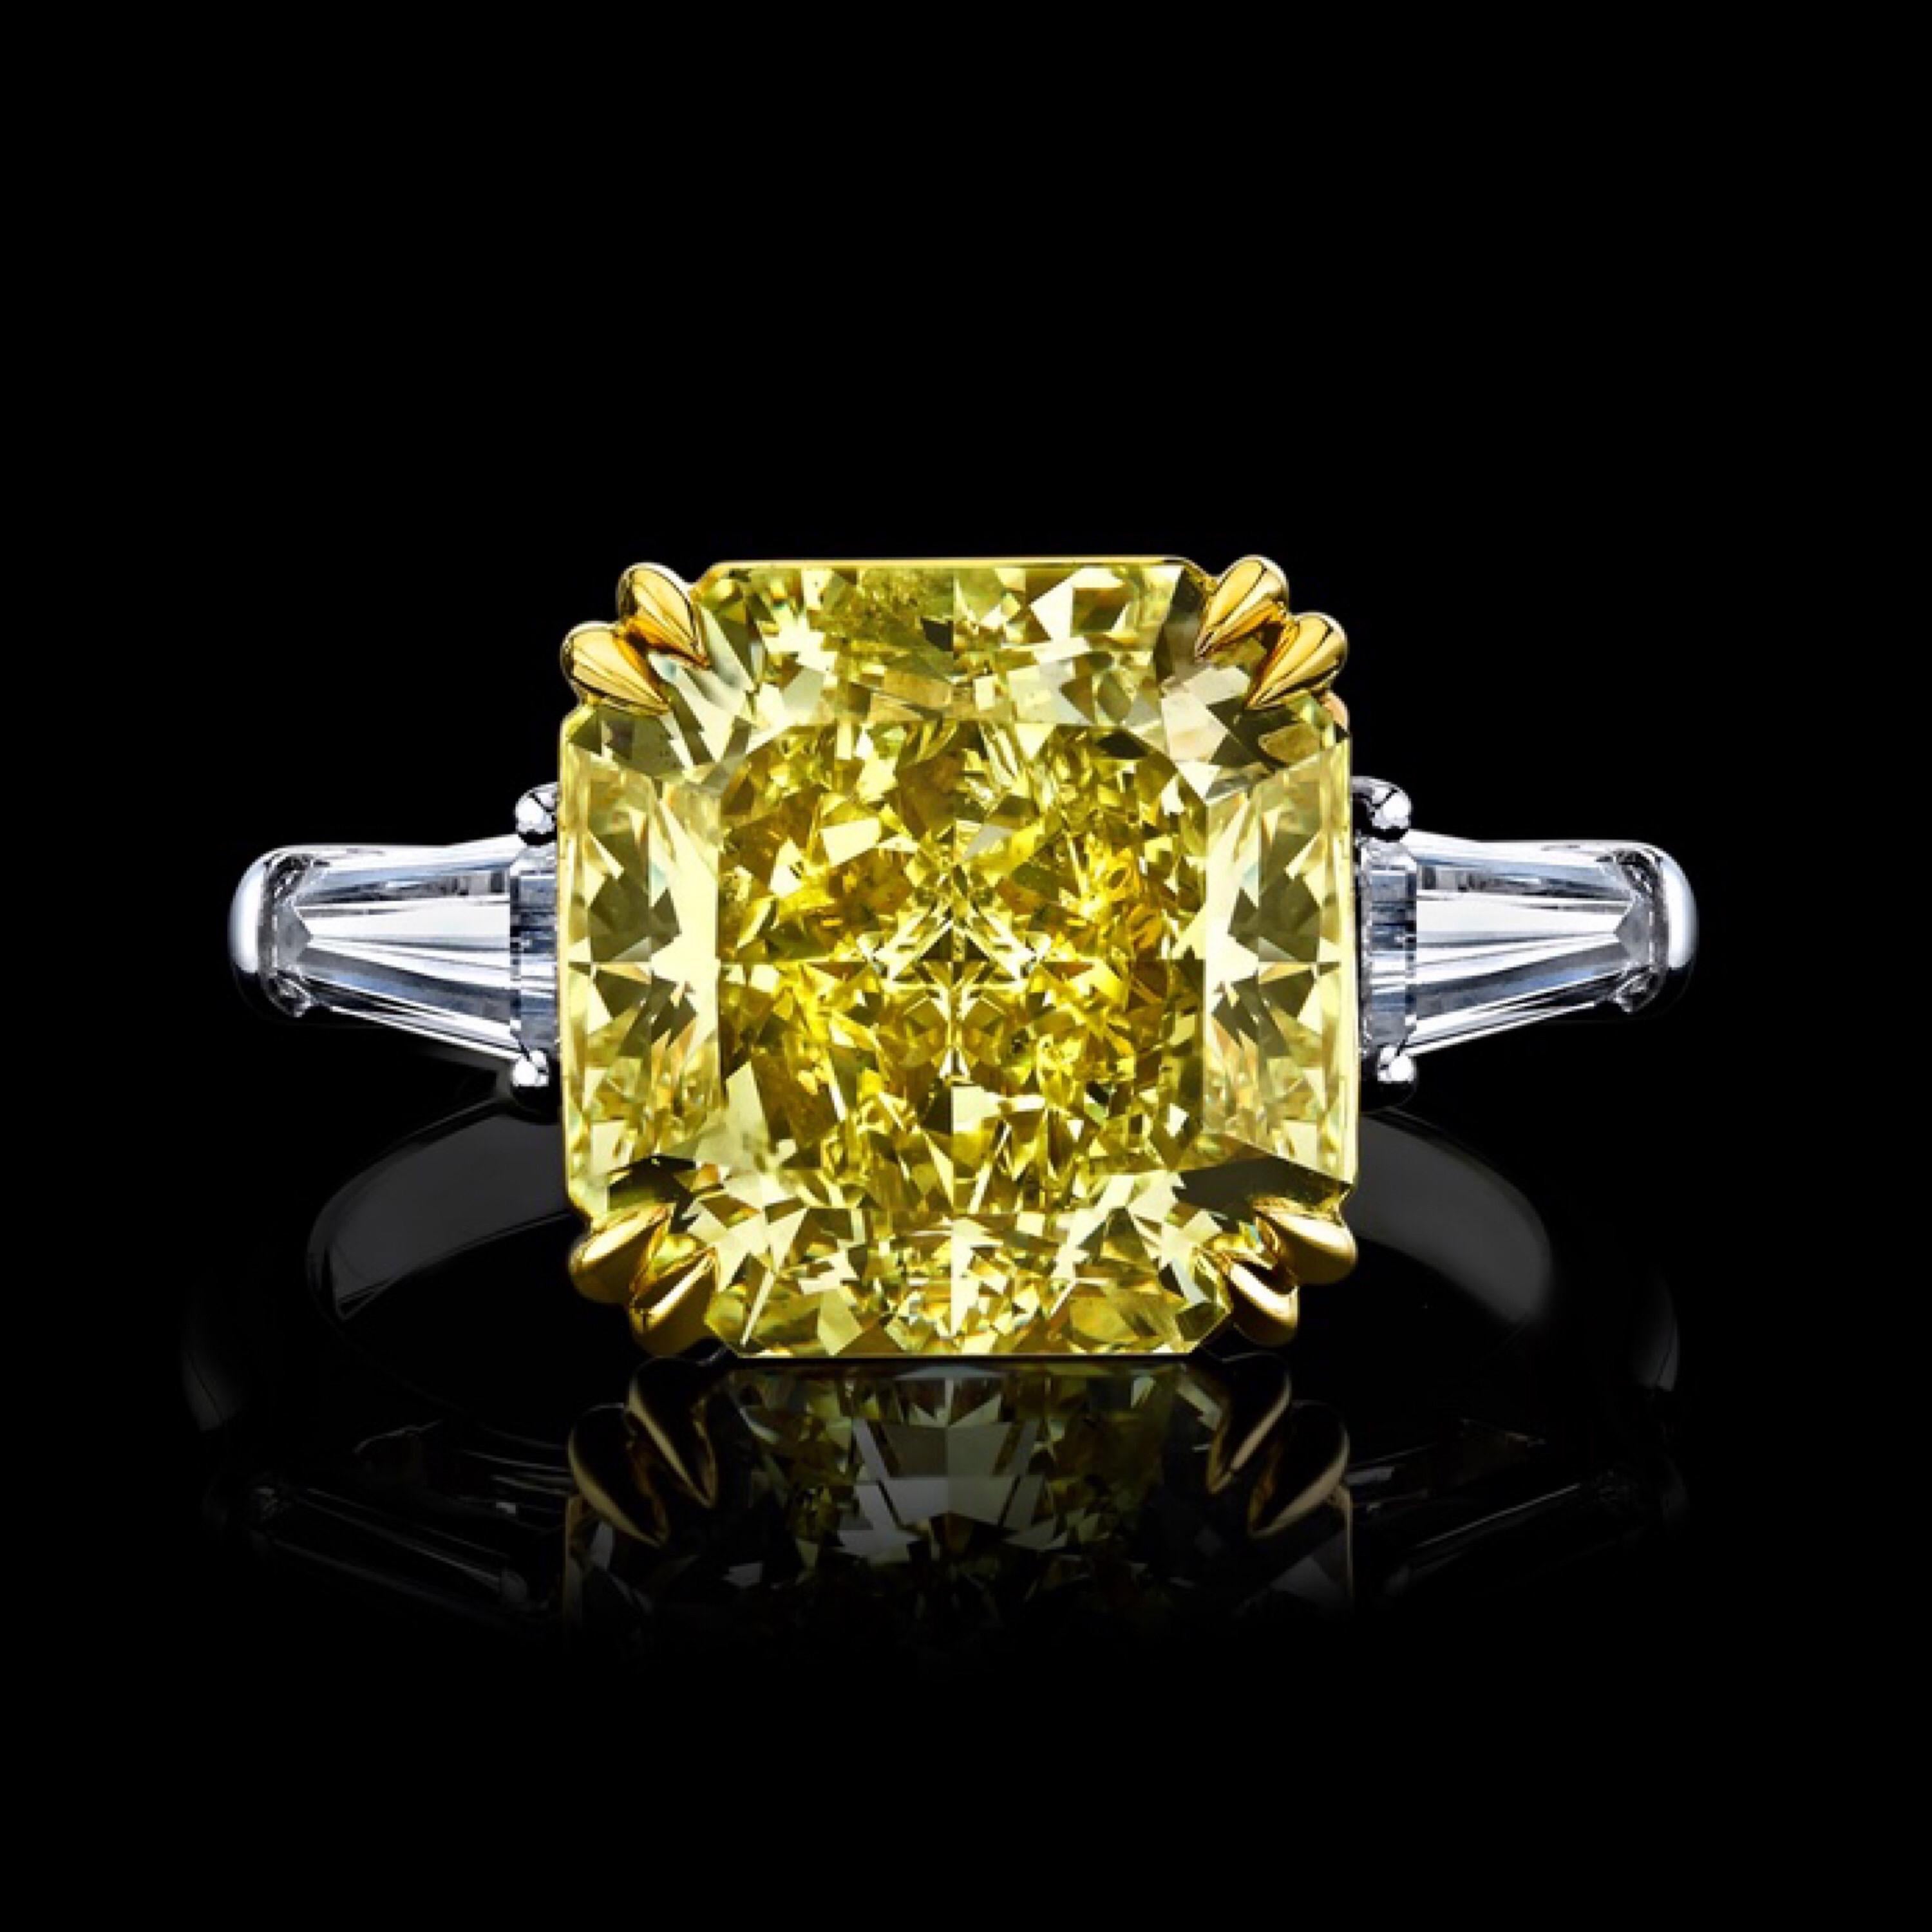 Radiant Cut Emilio Jewelry 6.50 Carat GIA Certified Fancy Yellow Diamond Ring